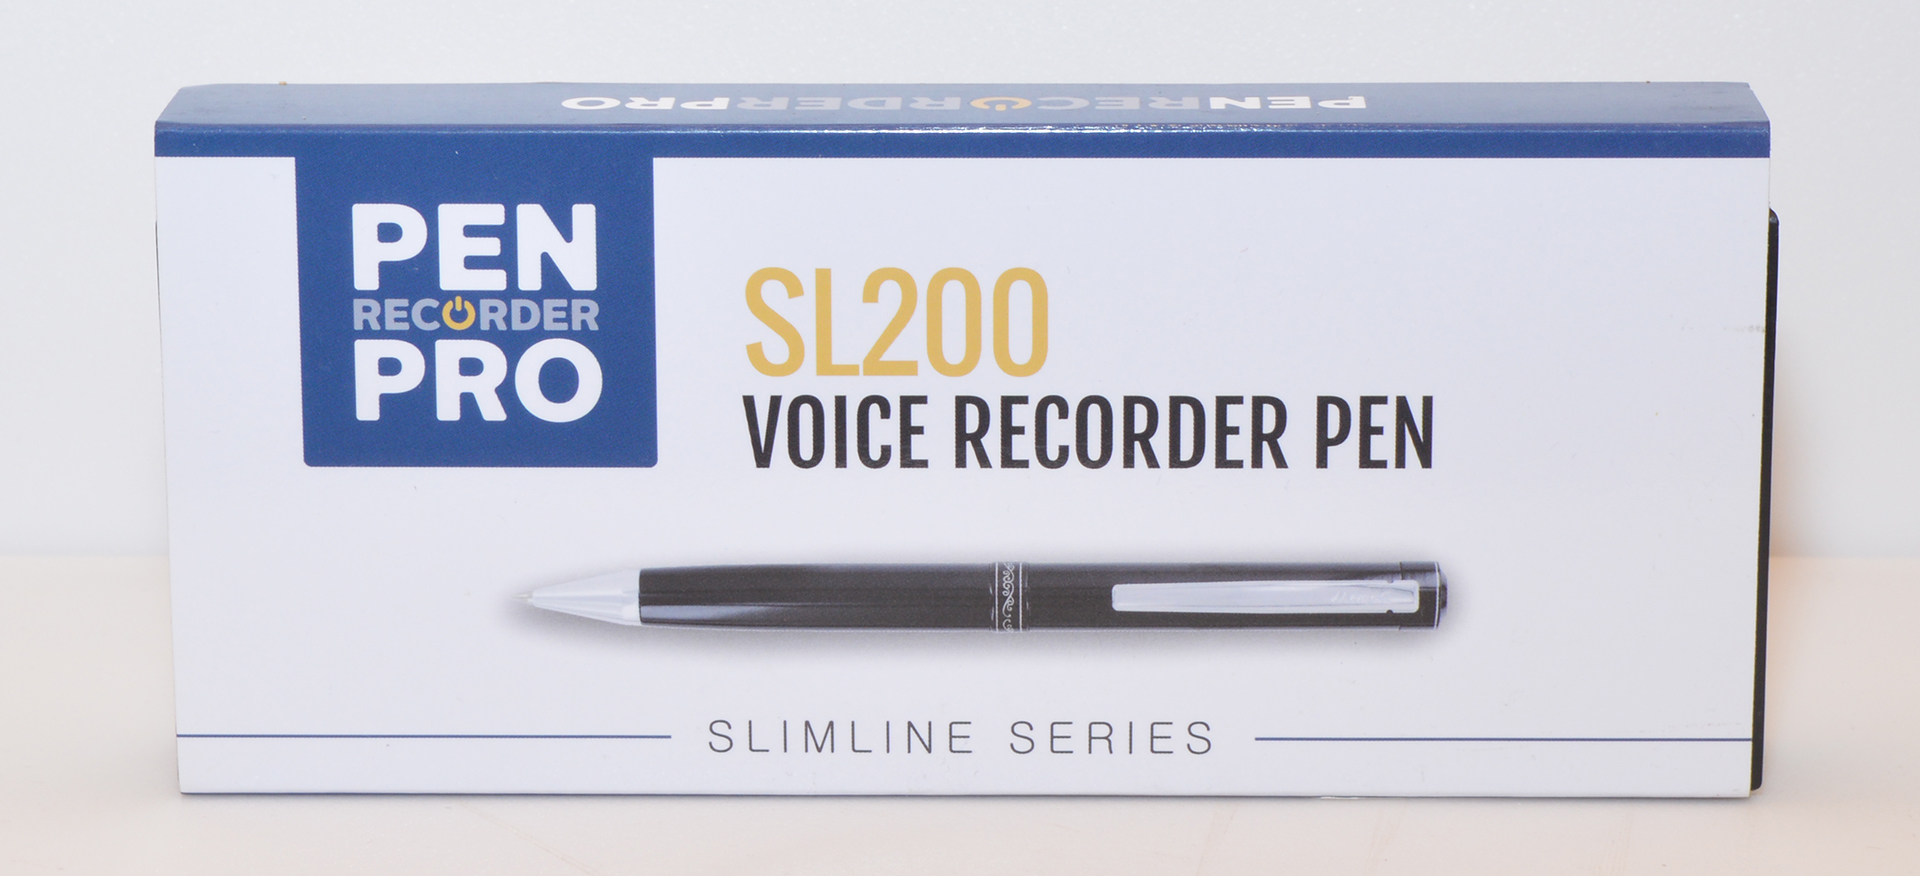 Voice recorder hd